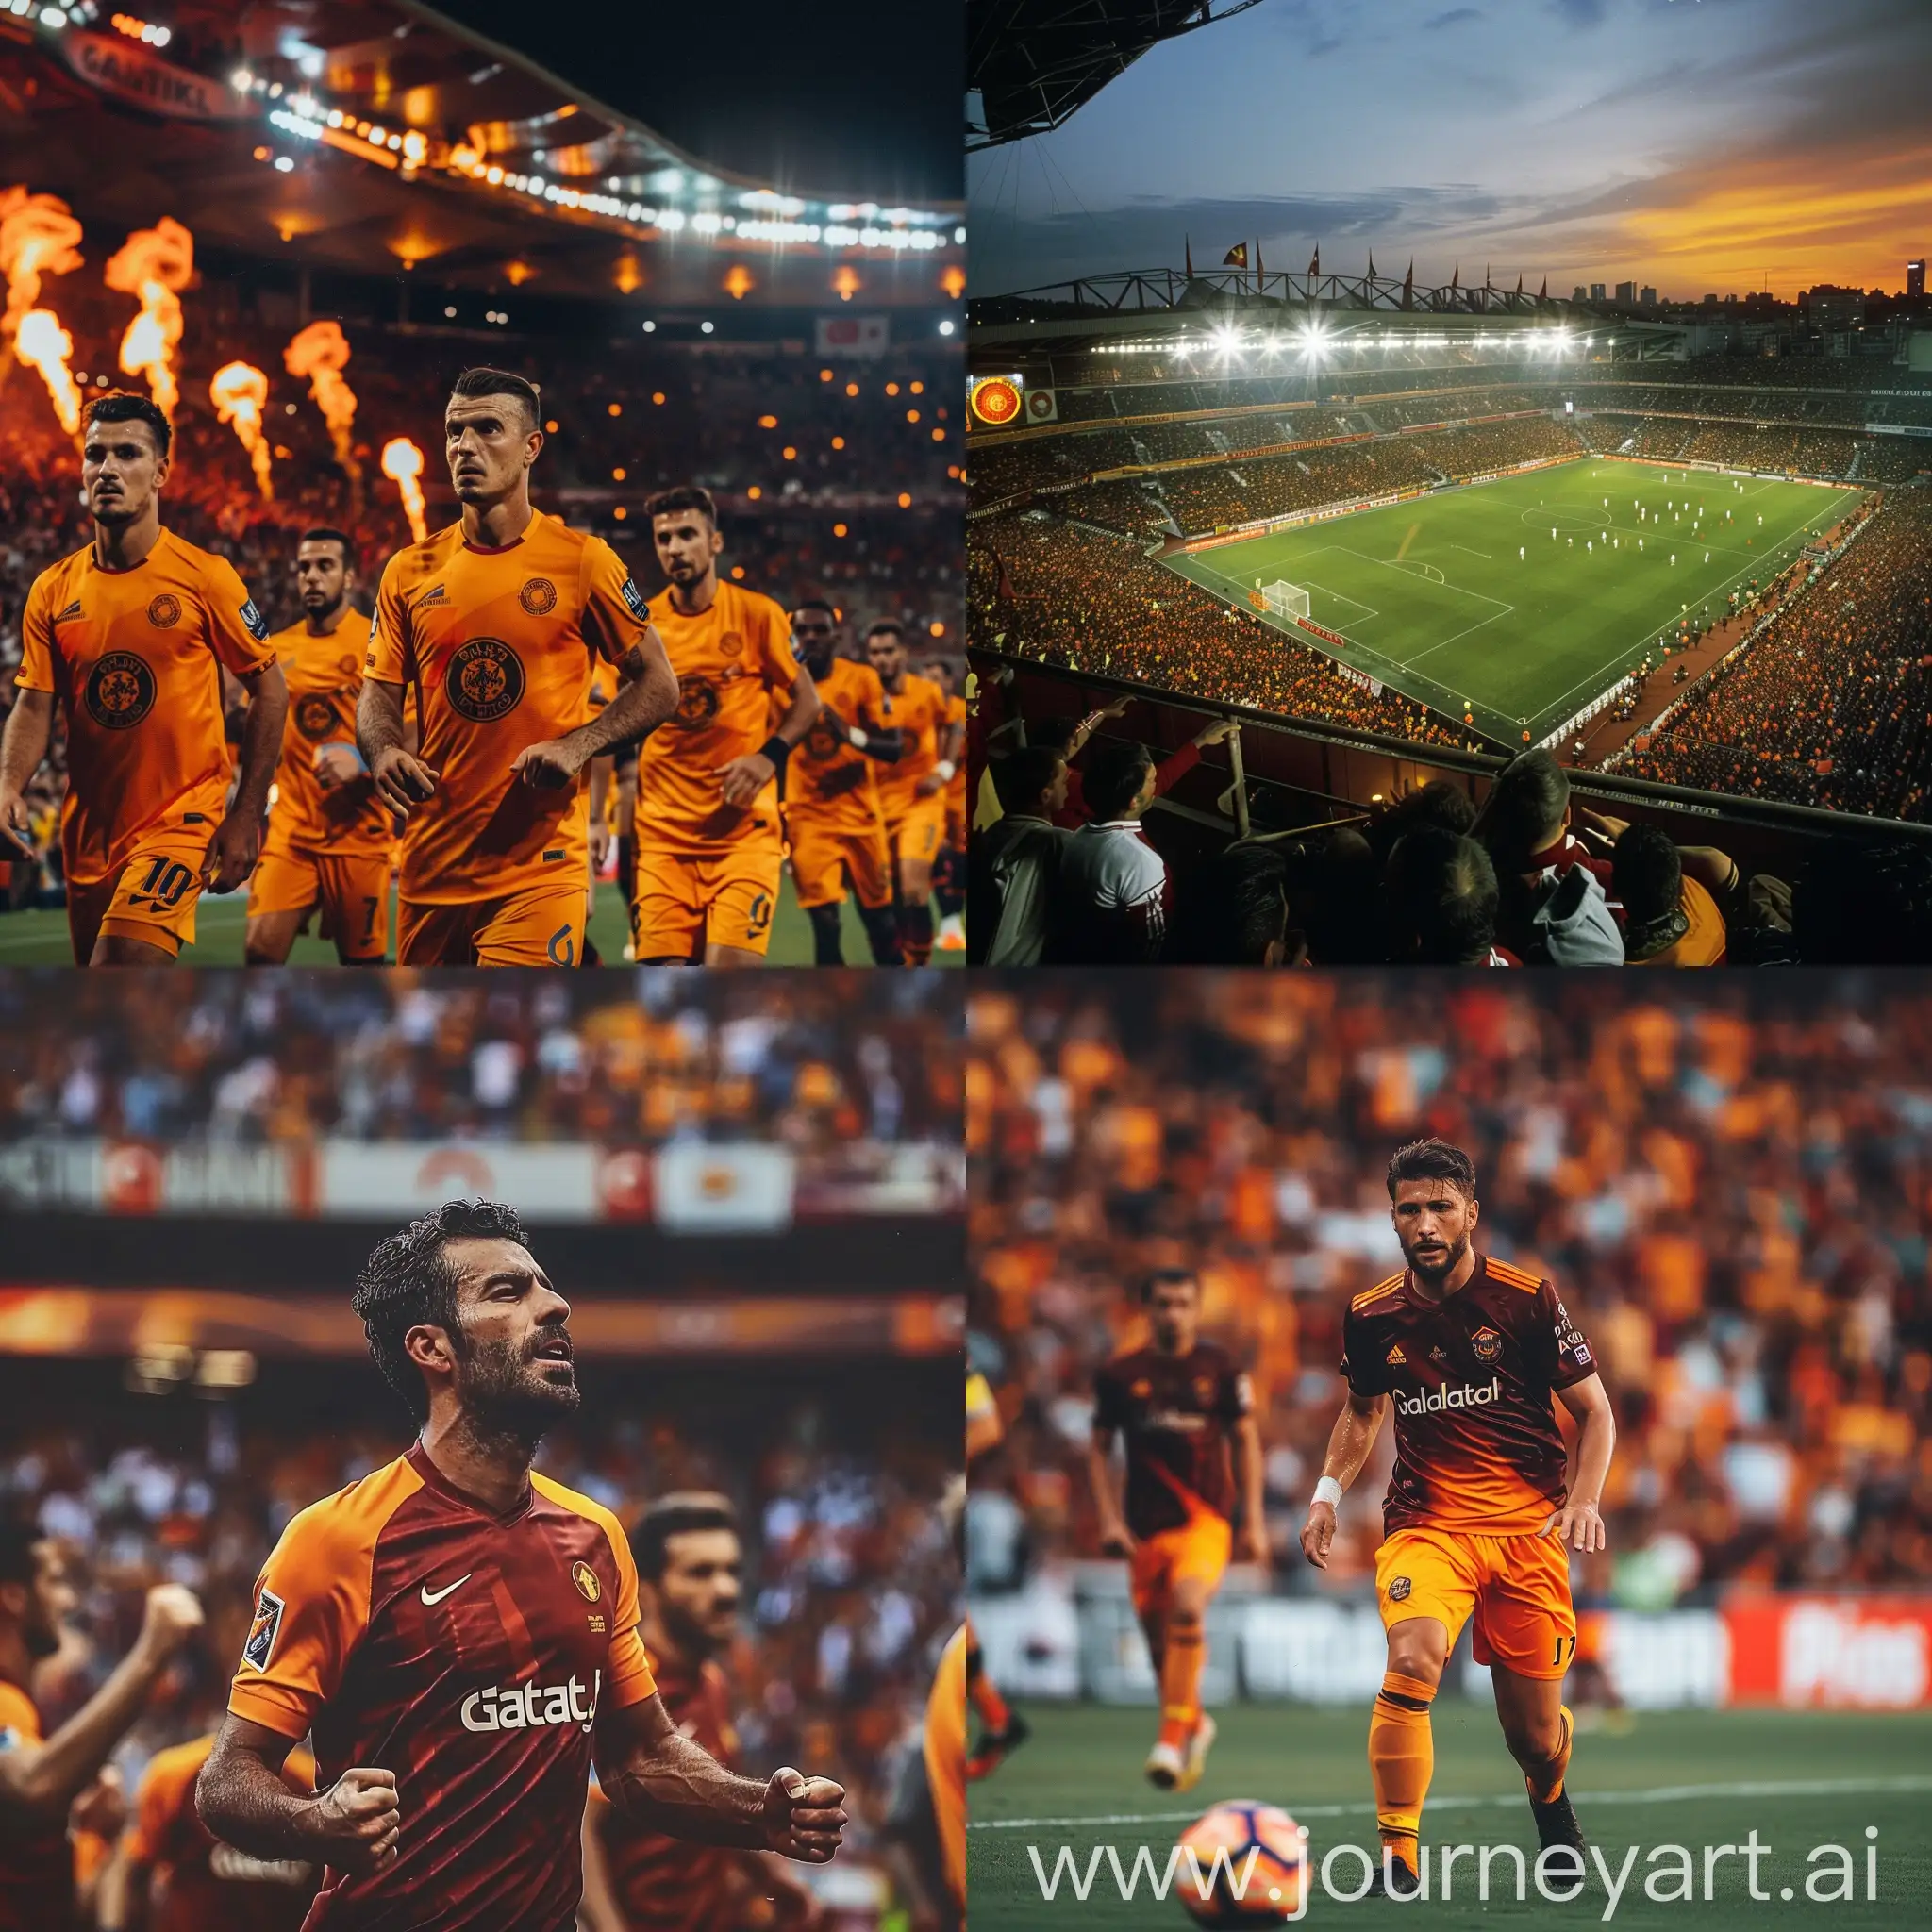 Galatasaray
